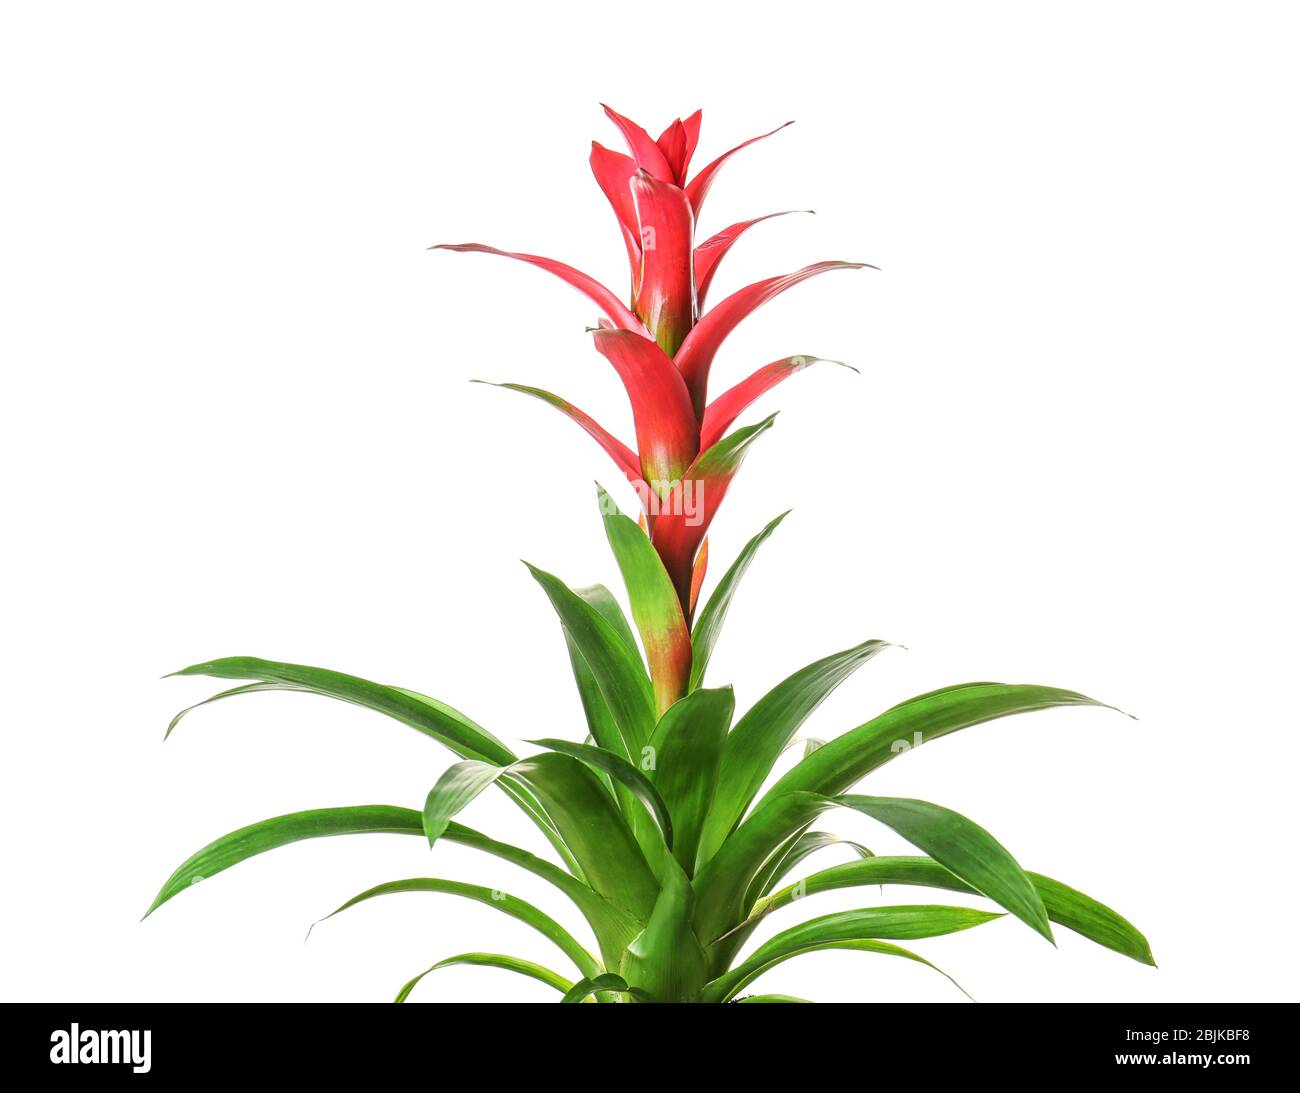 Red Guzmania flower on white background Stock Photo